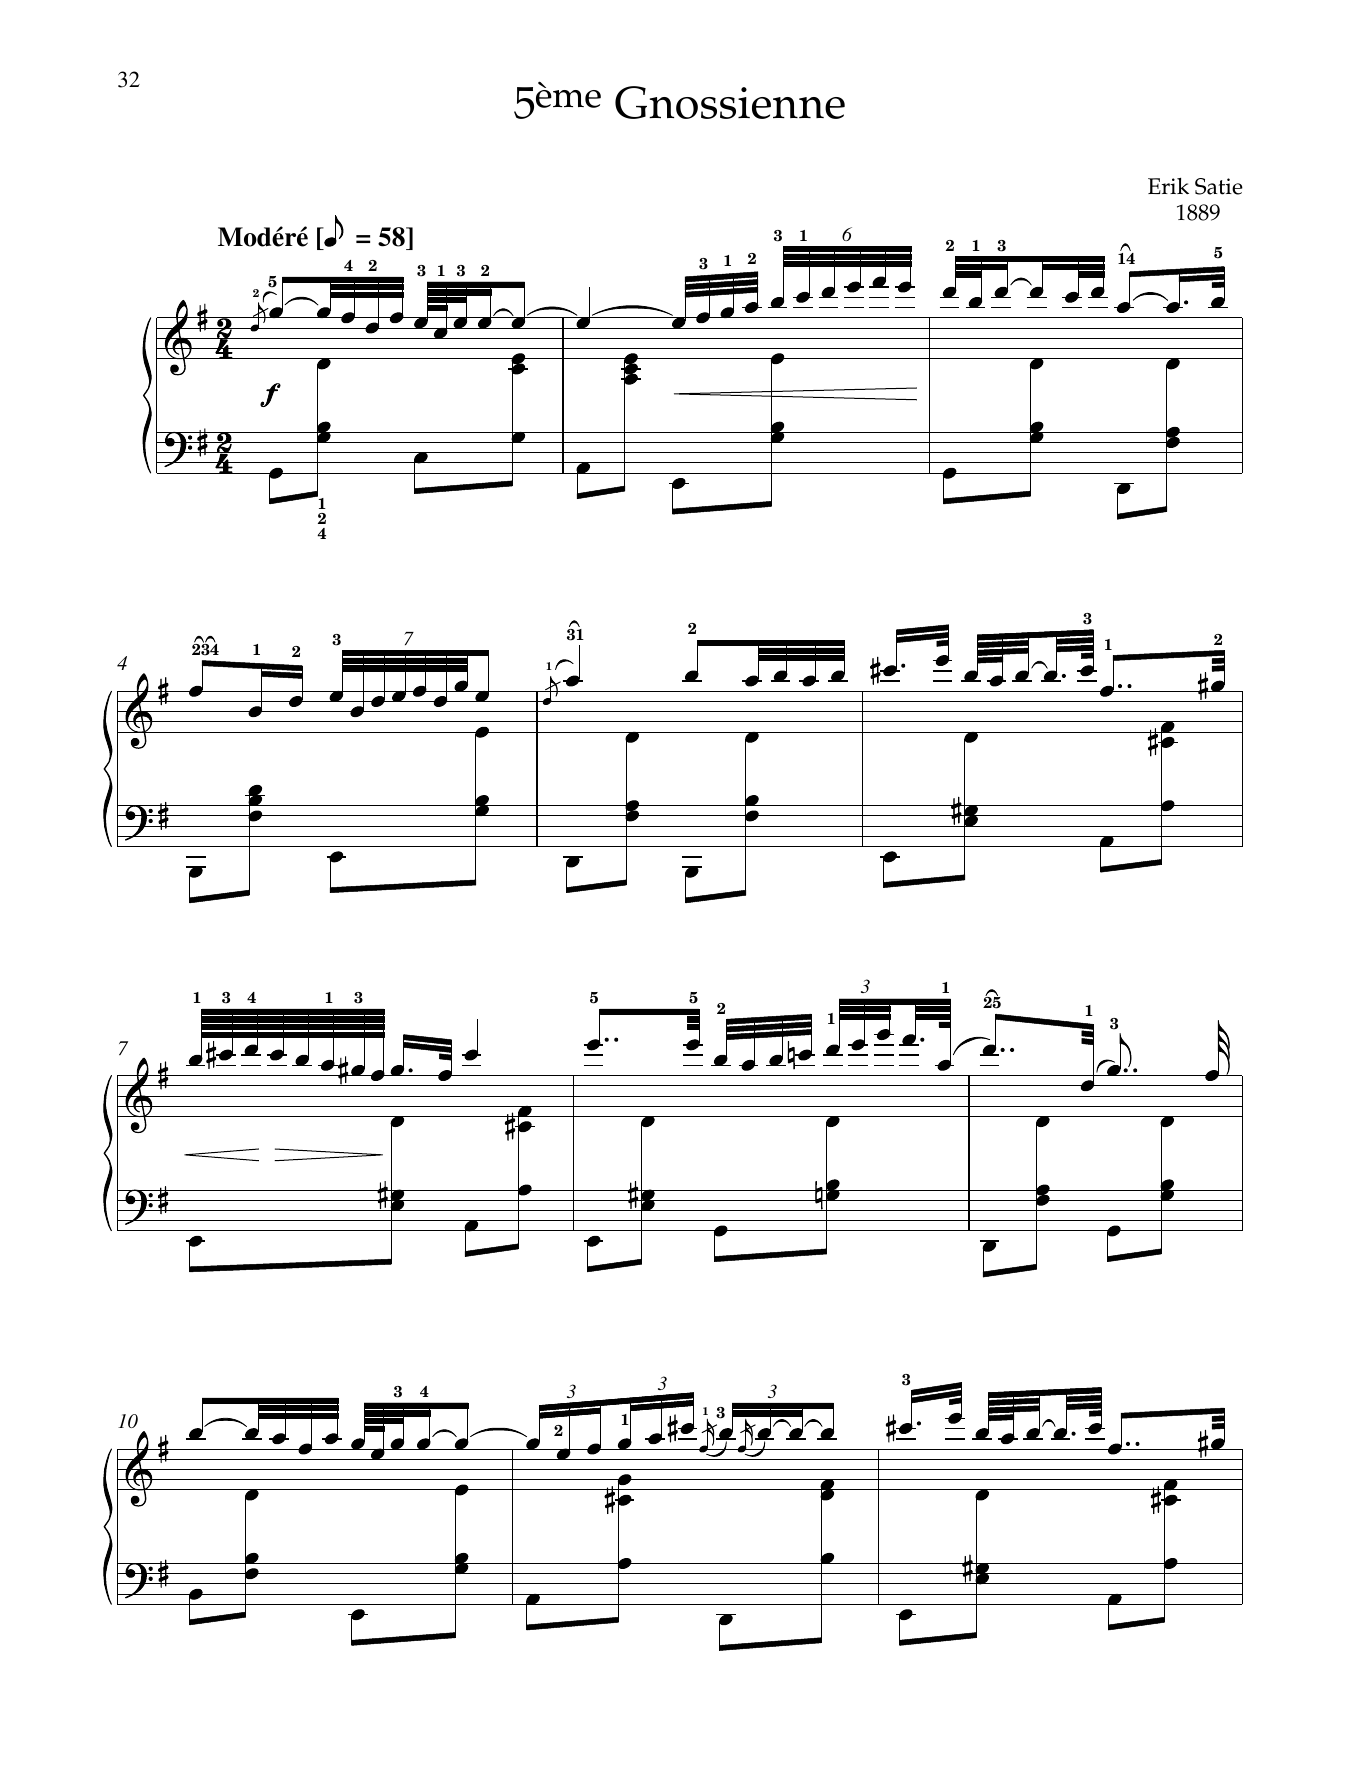 Erik Satie 5ème Gnossienne Sheet Music Notes & Chords for Piano Solo - Download or Print PDF